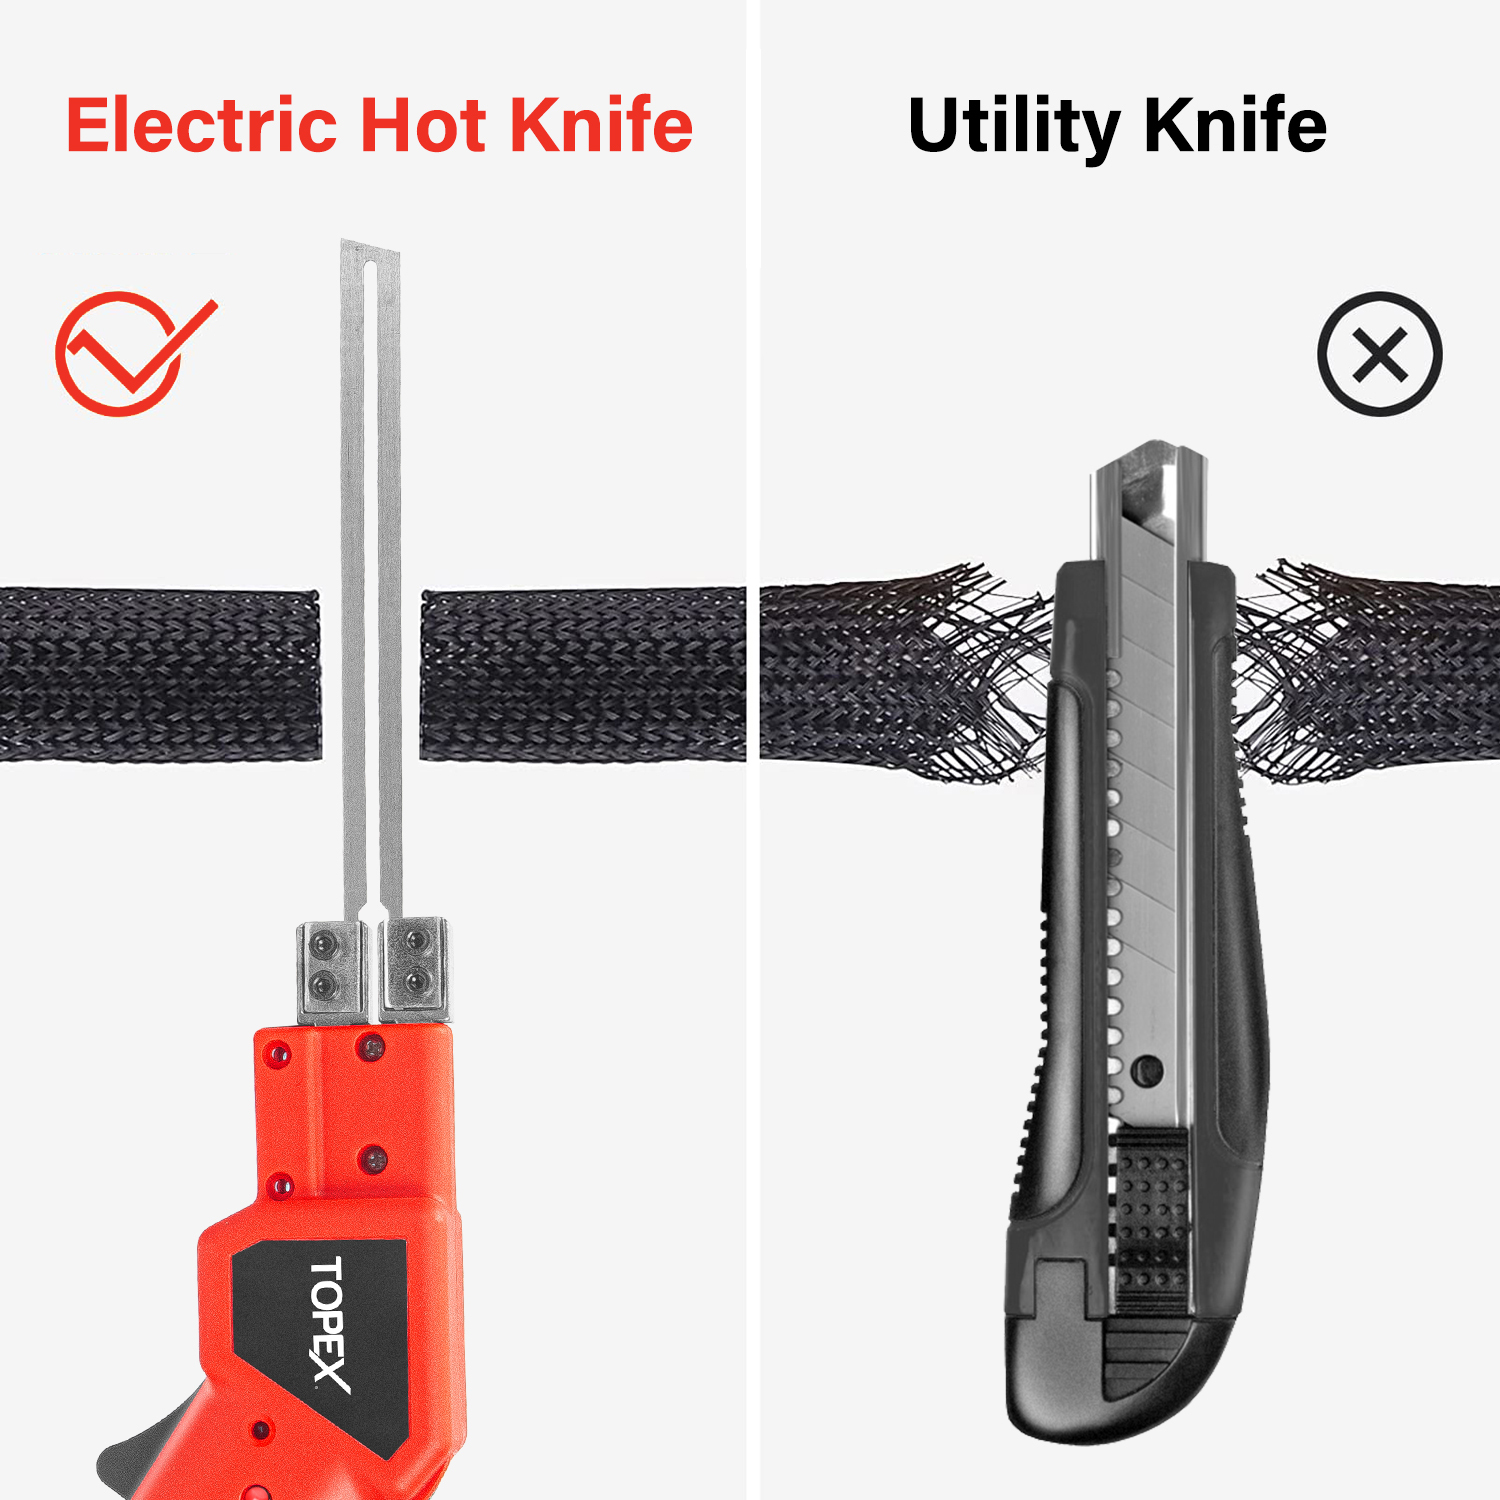 150W Electric Hot Knife Cutter Tool, UK Plug